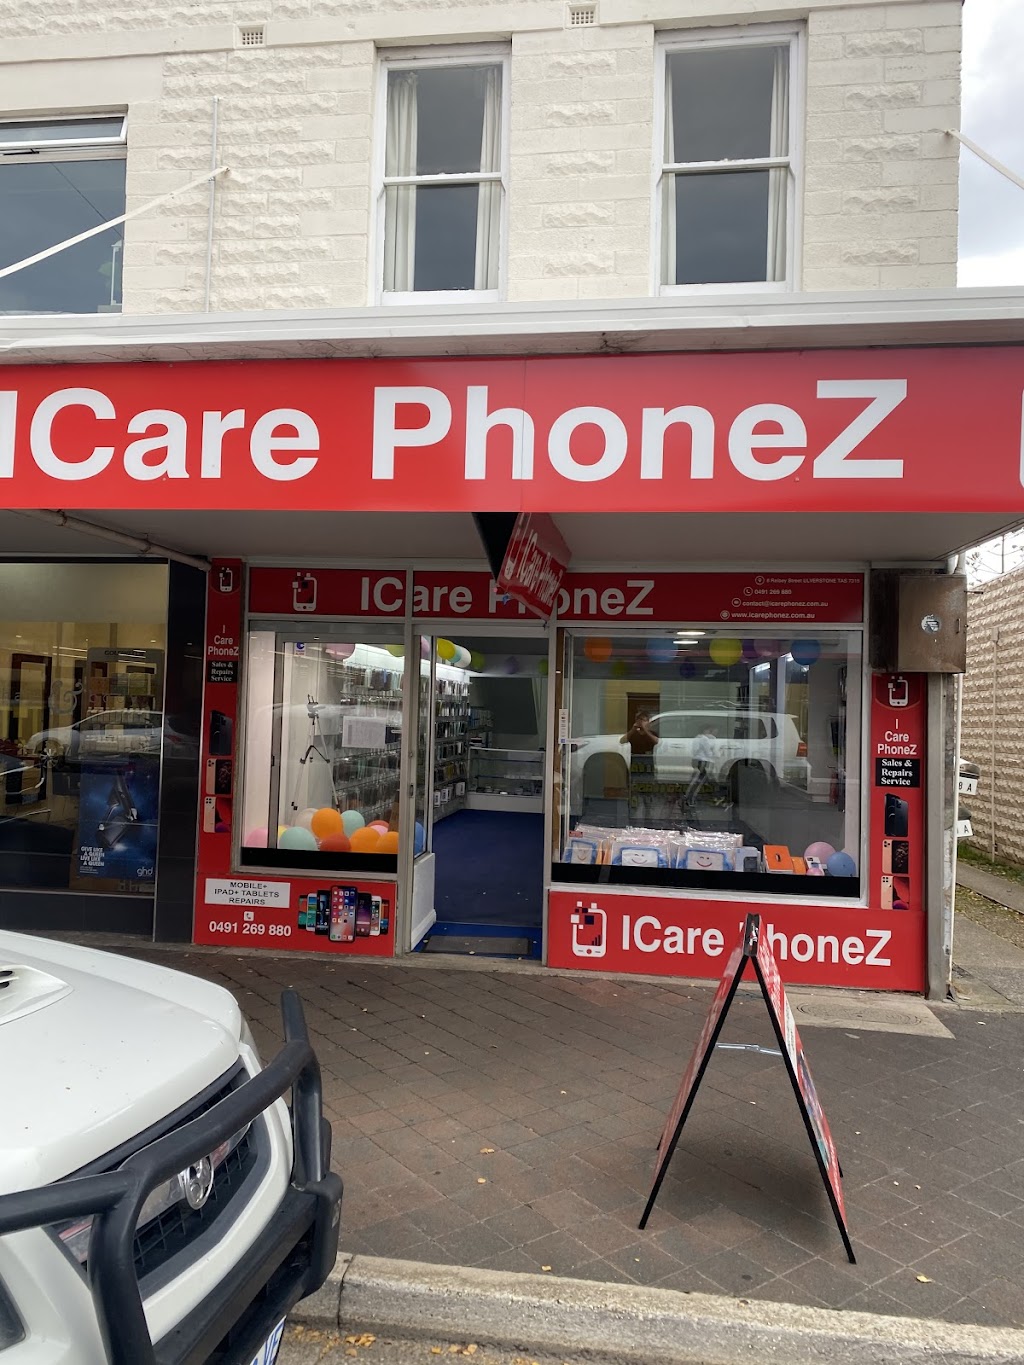 Icare phonez | store | 8 Reibey St, Ulverstone TAS 7315, Australia | 0491269880 OR +61 491 269 880